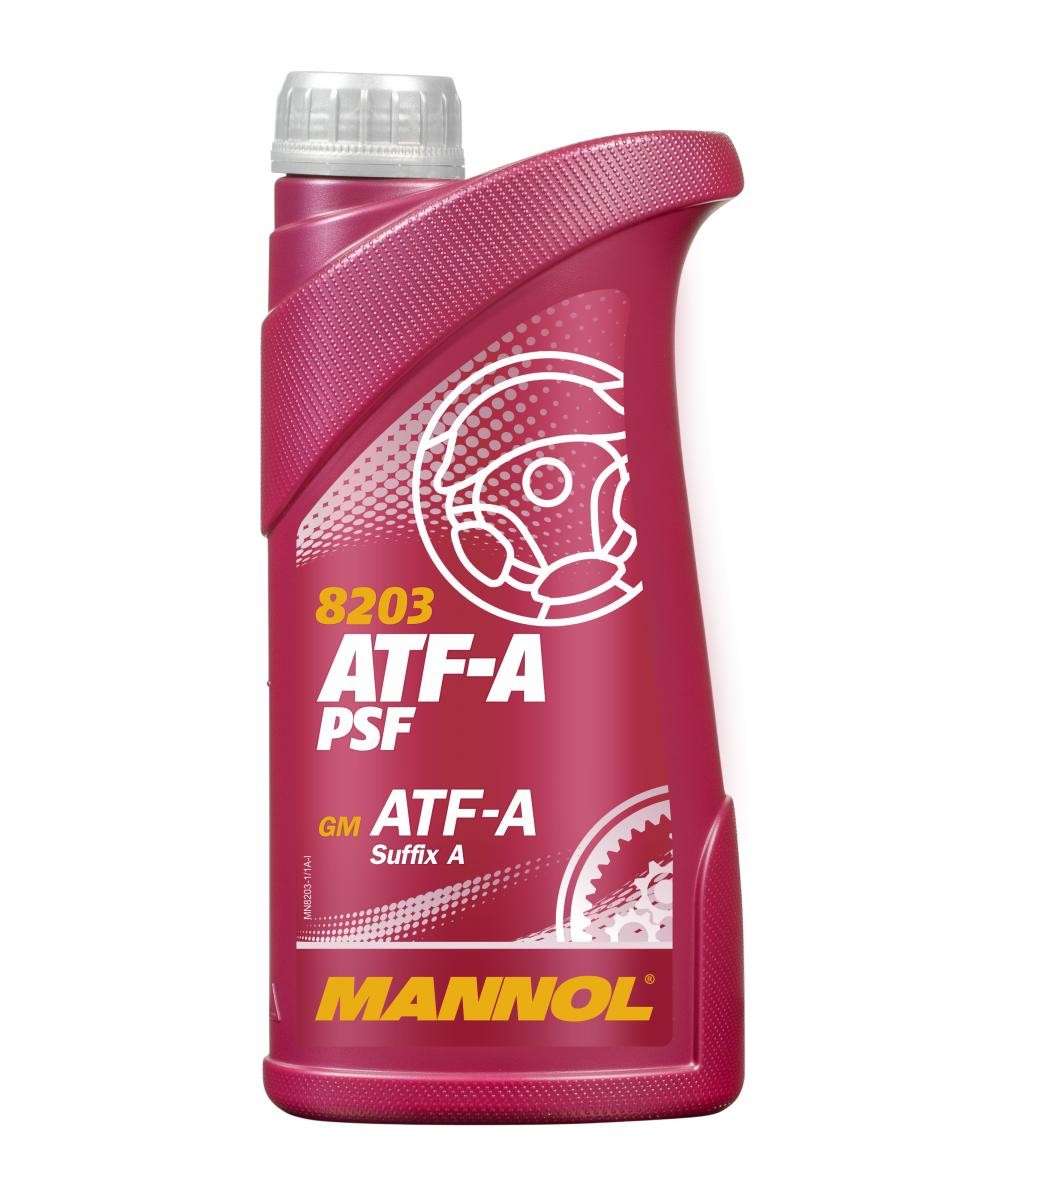 MANNOL ATF-A PSF ATF-A, 1l, Rot Automatikgetriebeöl MN8203-1 kaufen